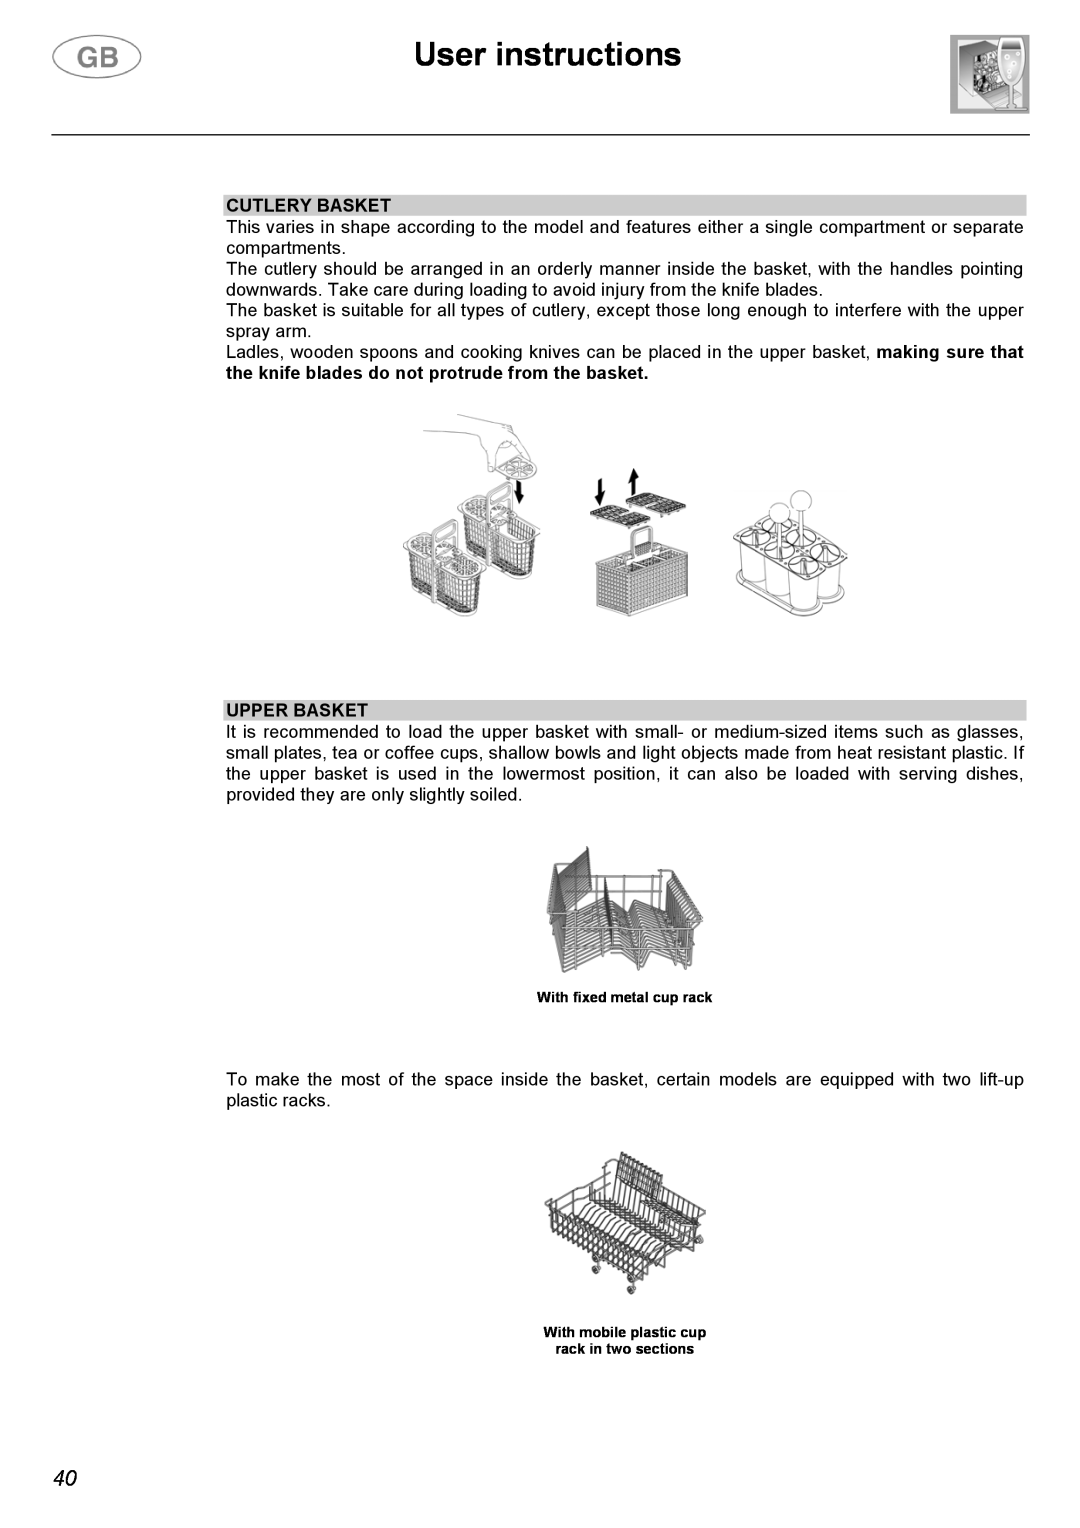 Smeg EL05 instruction manual User instructions, Cutlery Basket, Upper Basket, With fixed metal cup rack 